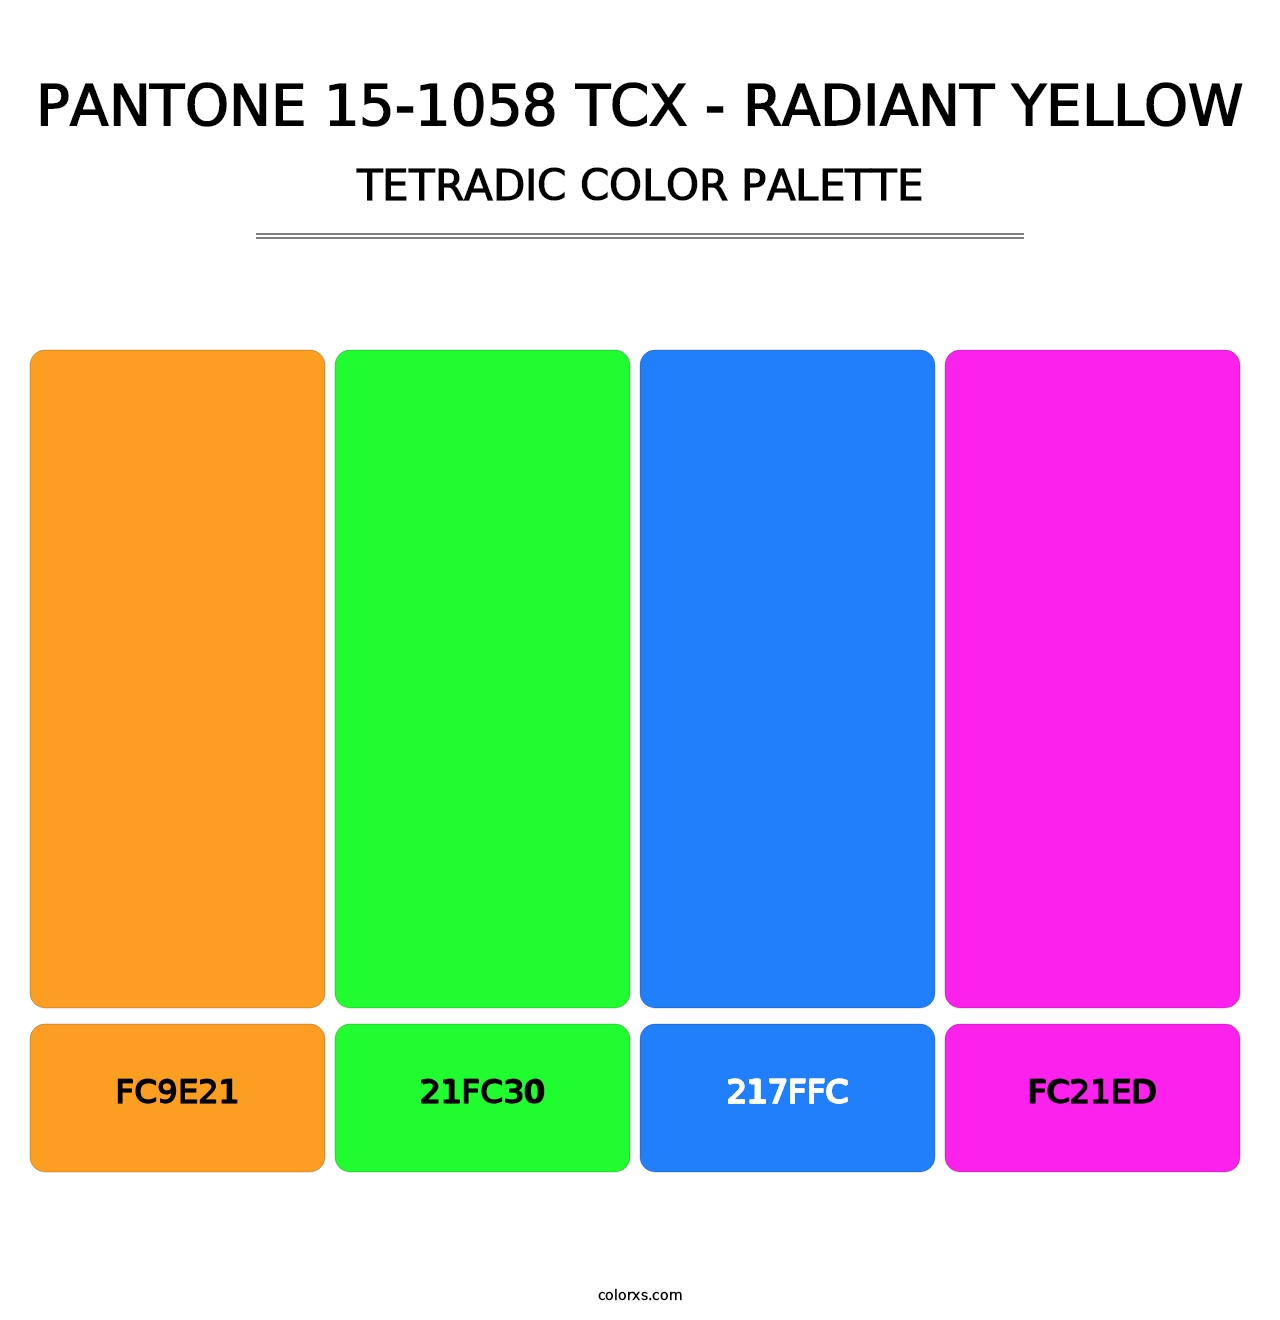 PANTONE 15-1058 TCX - Radiant Yellow - Tetradic Color Palette